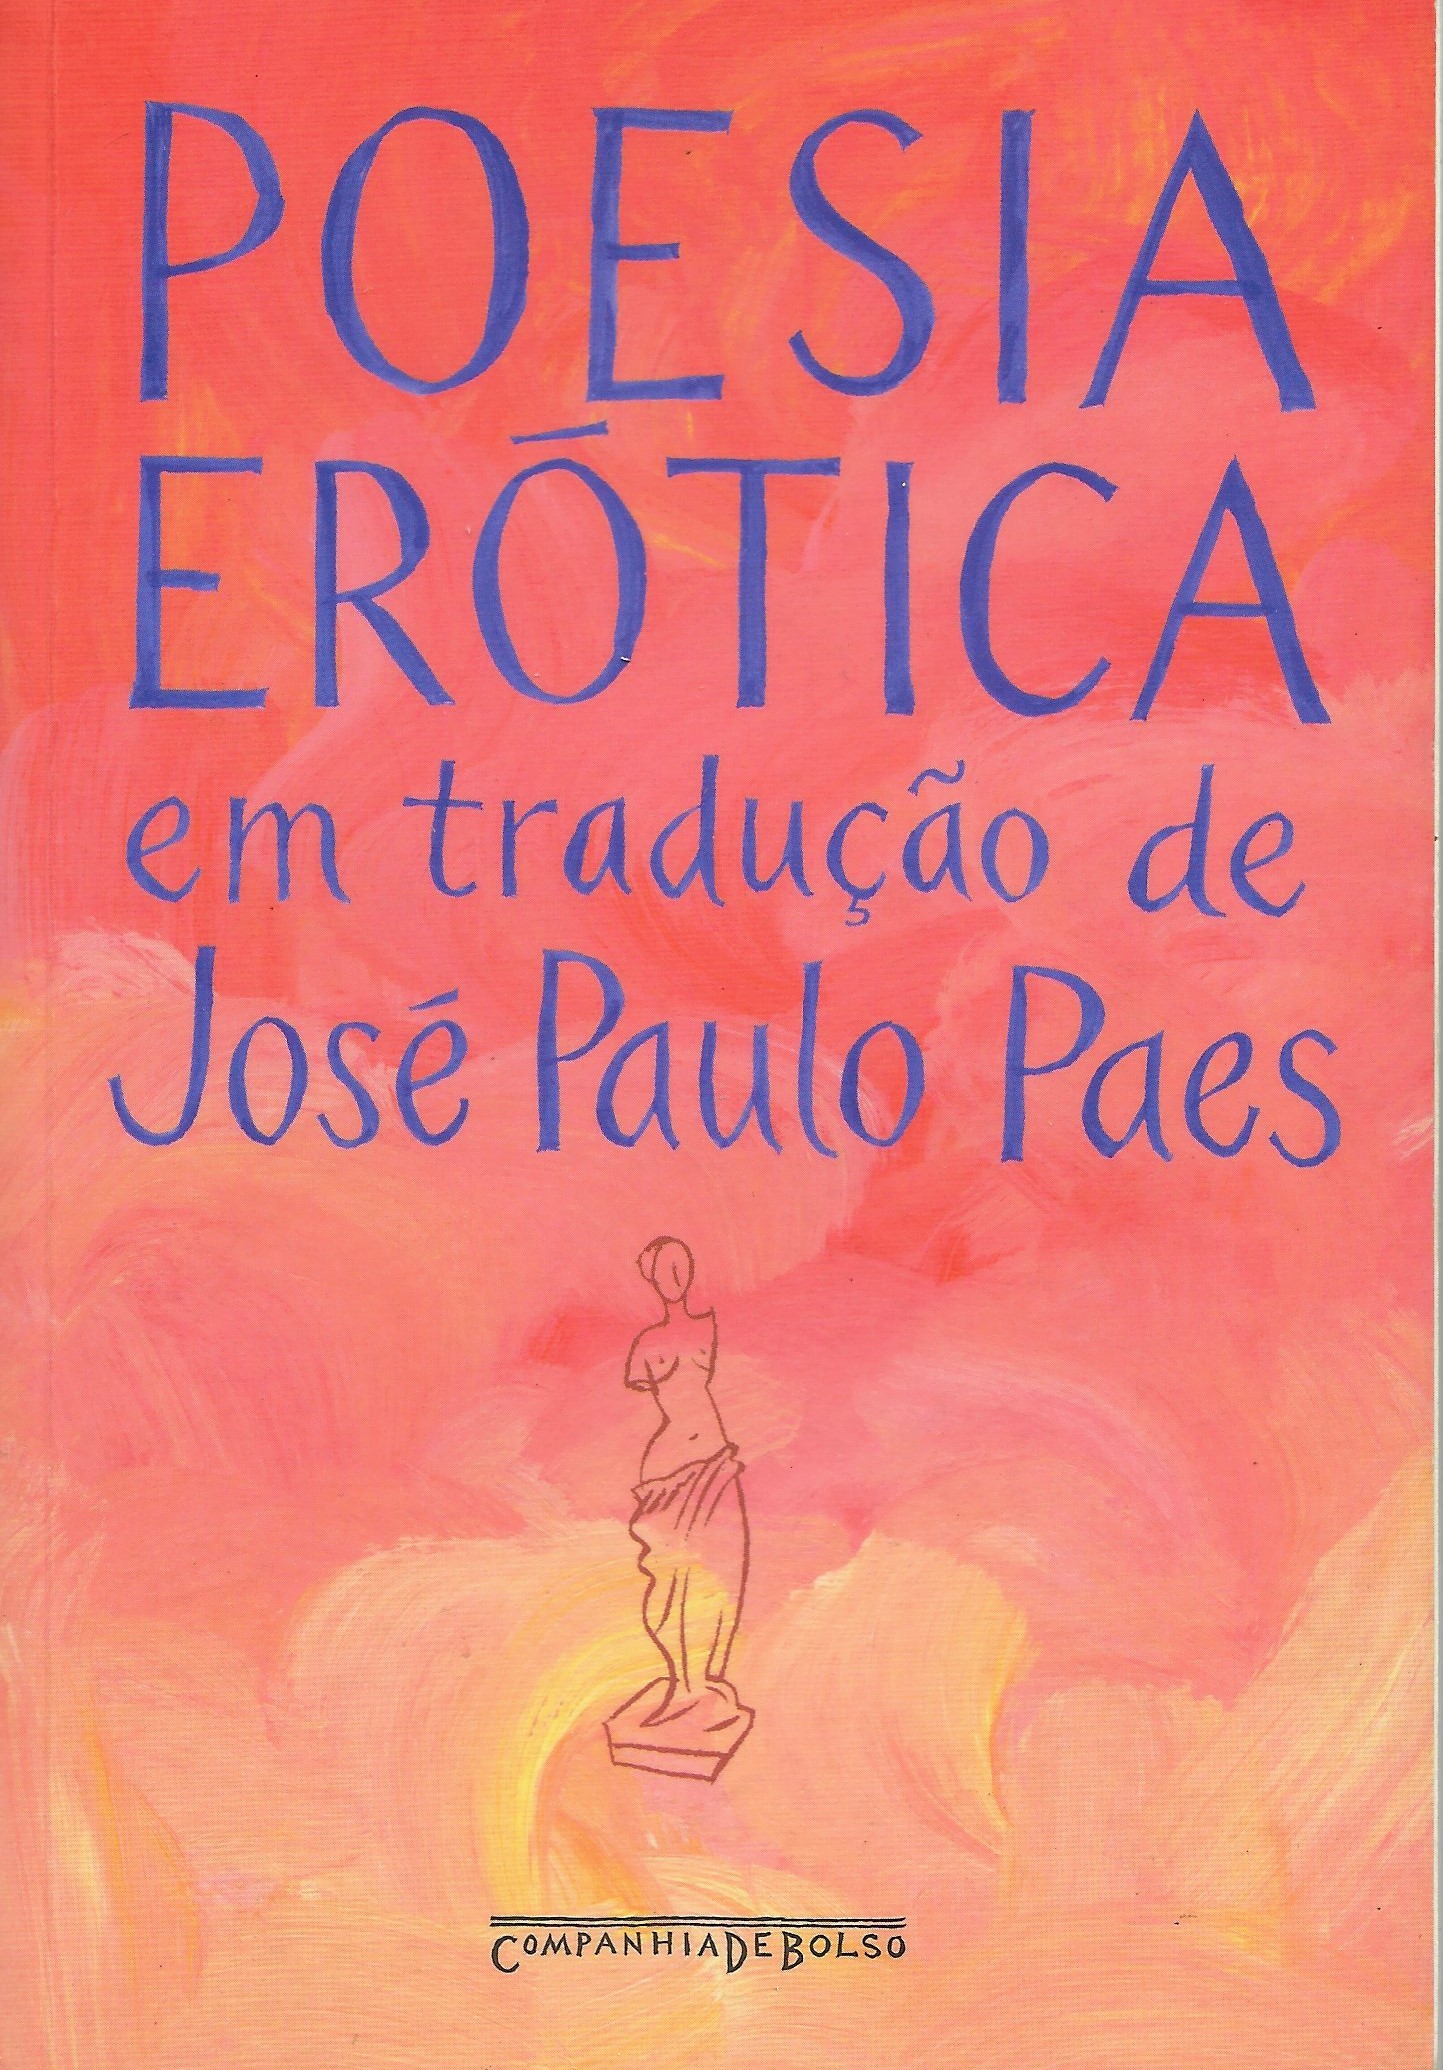 https://www.literaturabrasileira.ufsc.br/_images/obras/poesia_erotica.jpg